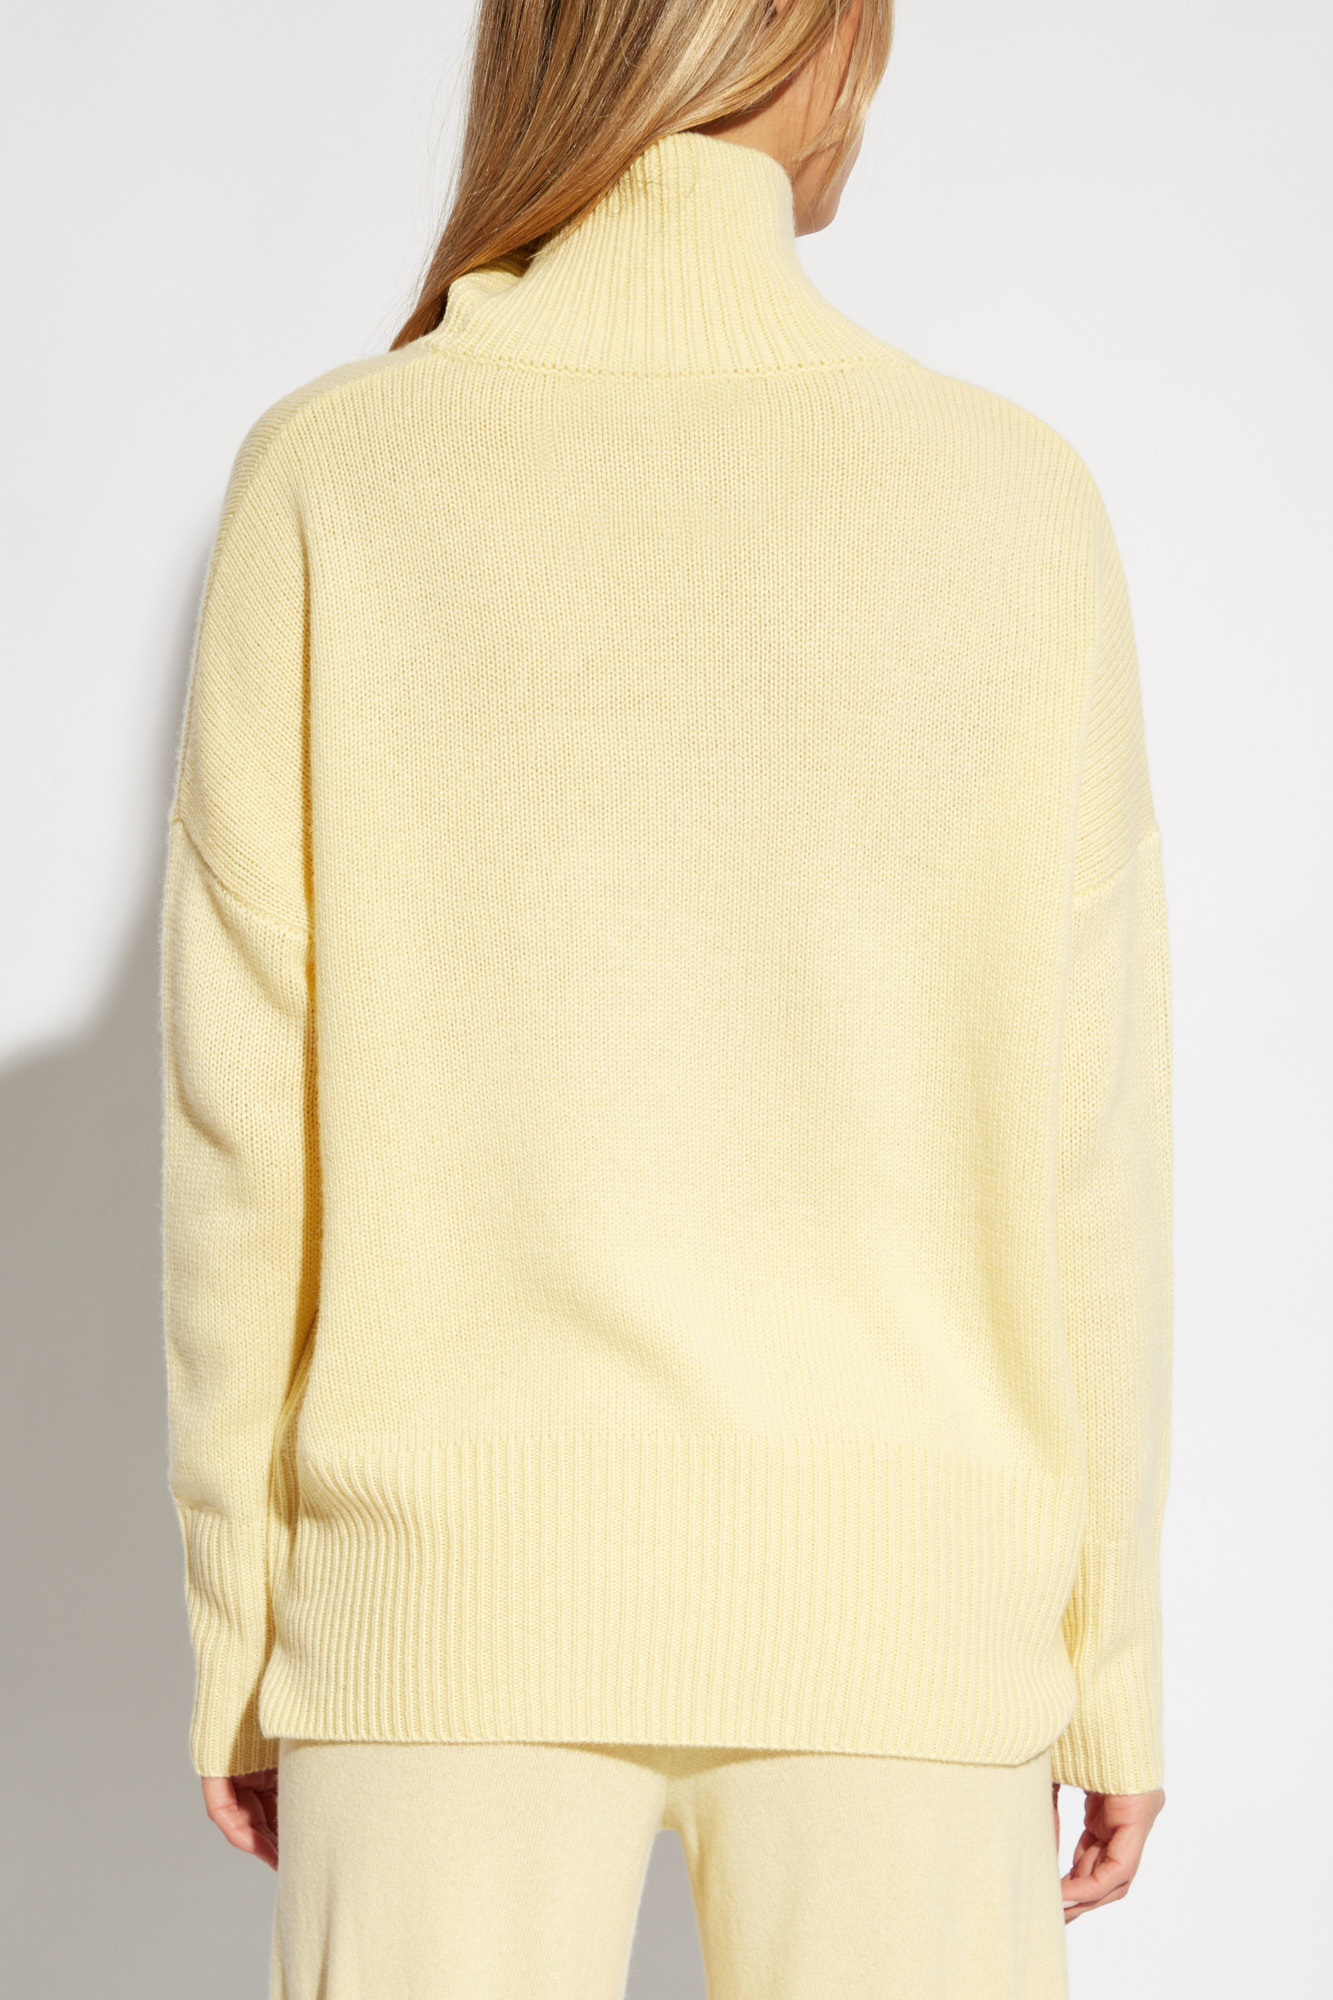 Lisa Yang ‘Heidi’ turtleneck sweater